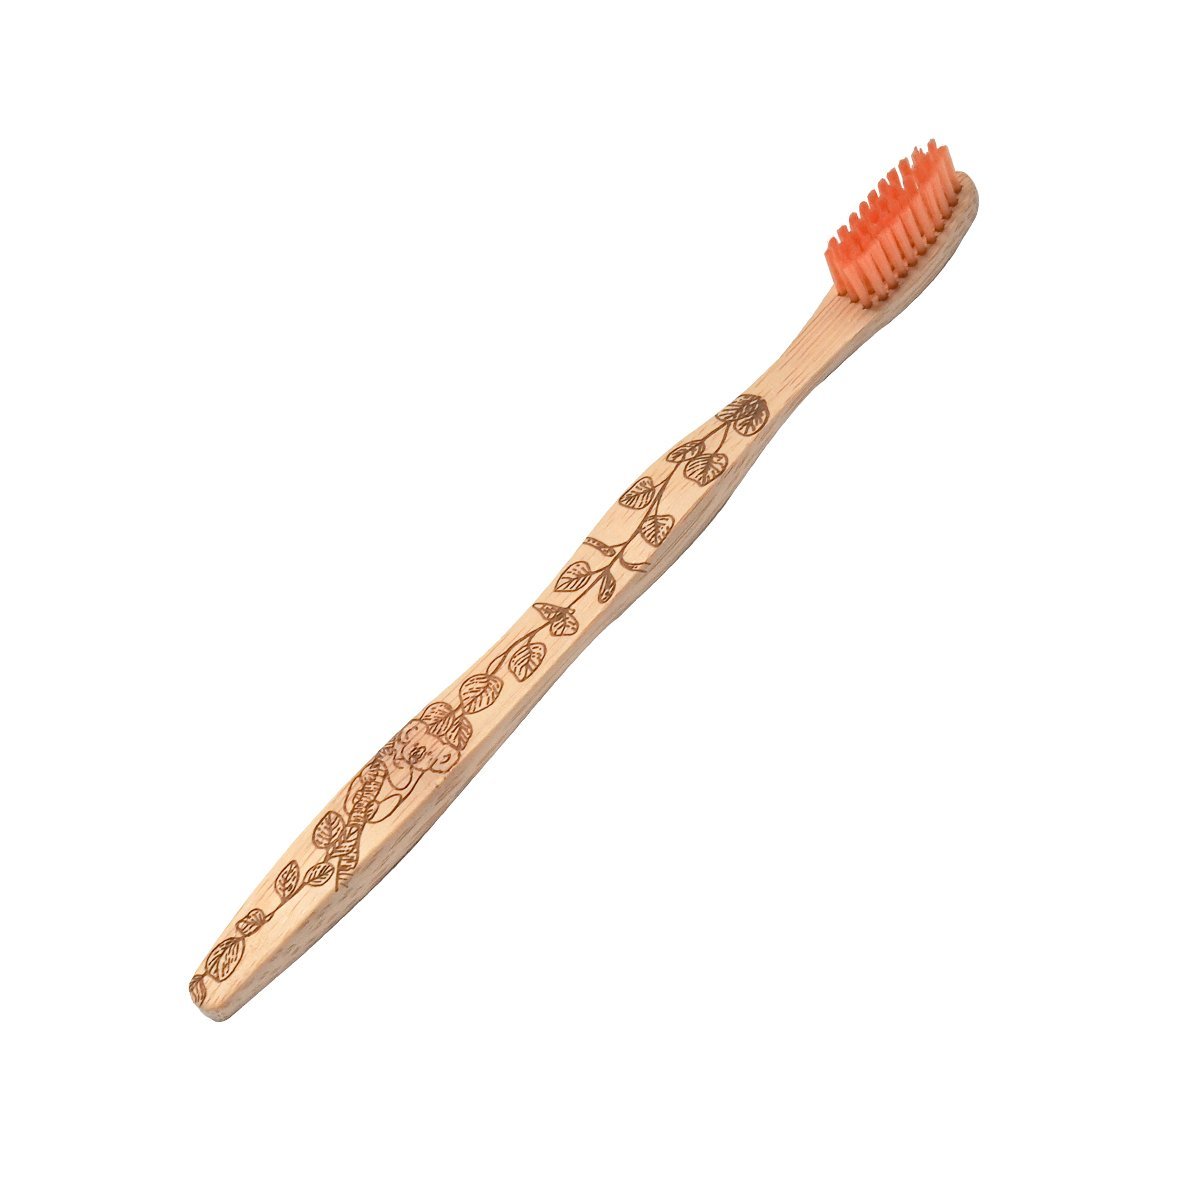 Brush It On Bamboo Toothbrush - Matilda - Adult